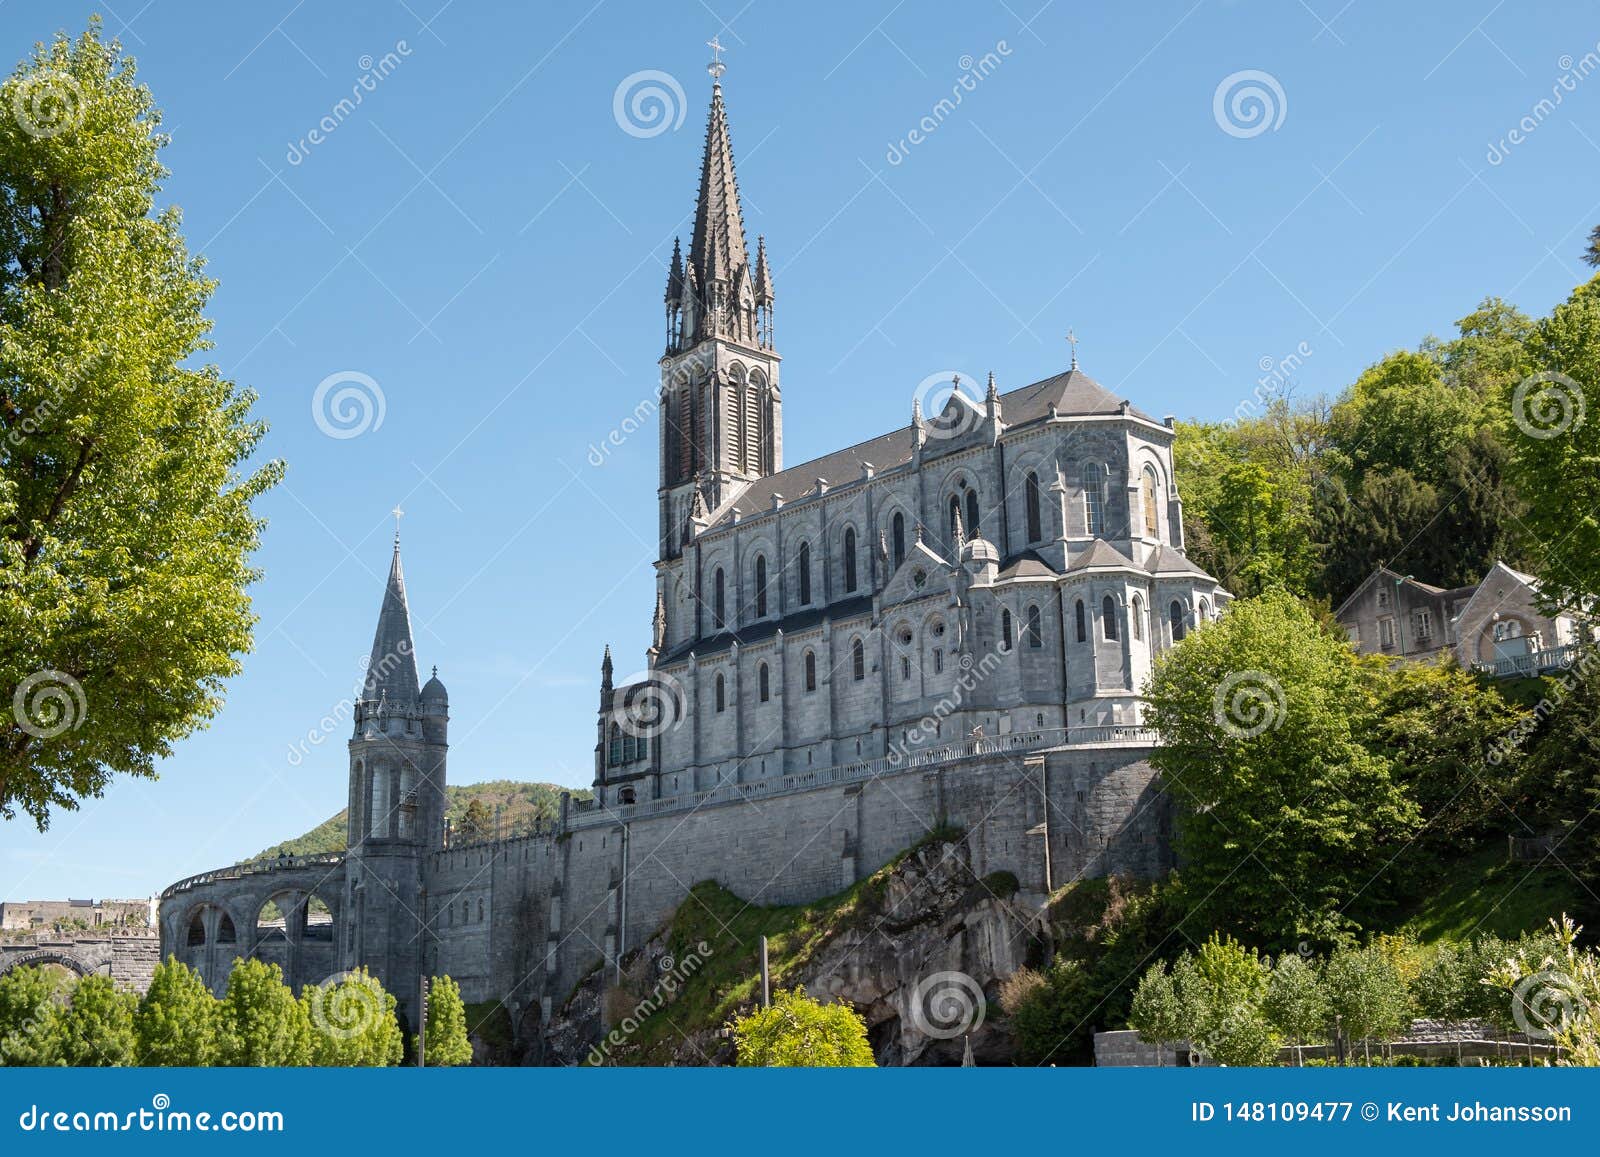 Upper Basilica - Lourdes France Stock Image - Image of pilgrimage ...